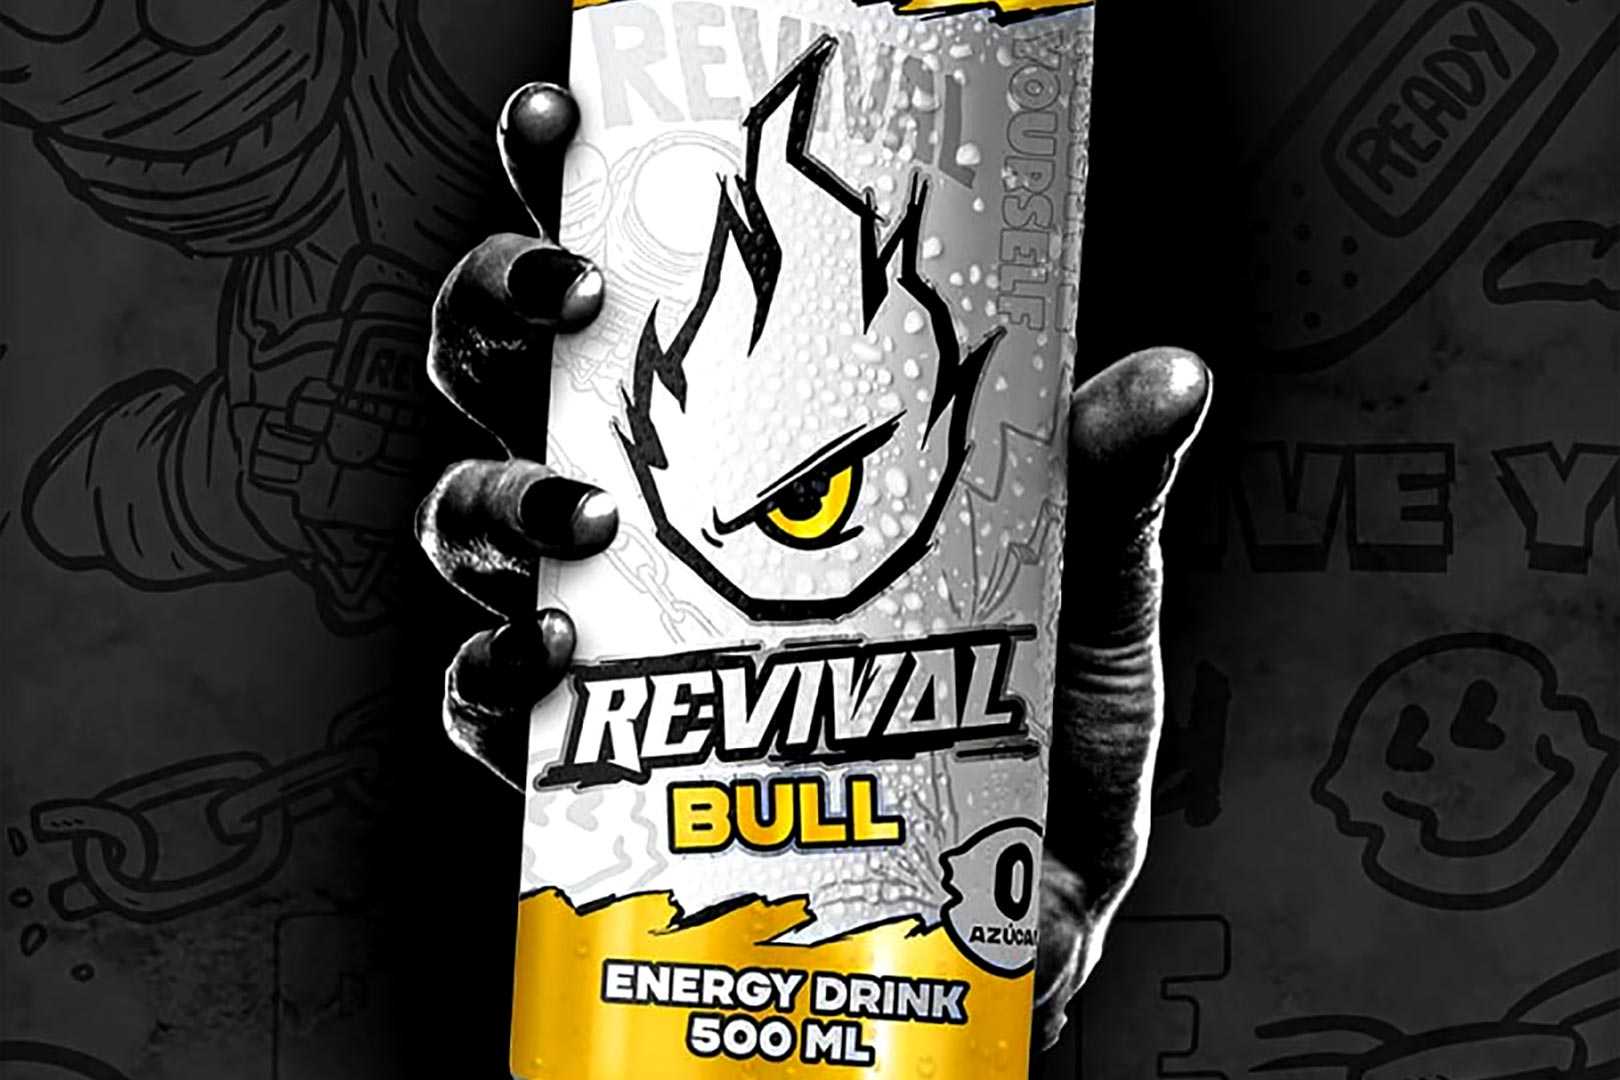 Life Pro Nutrition Revival Bull Energy Drink